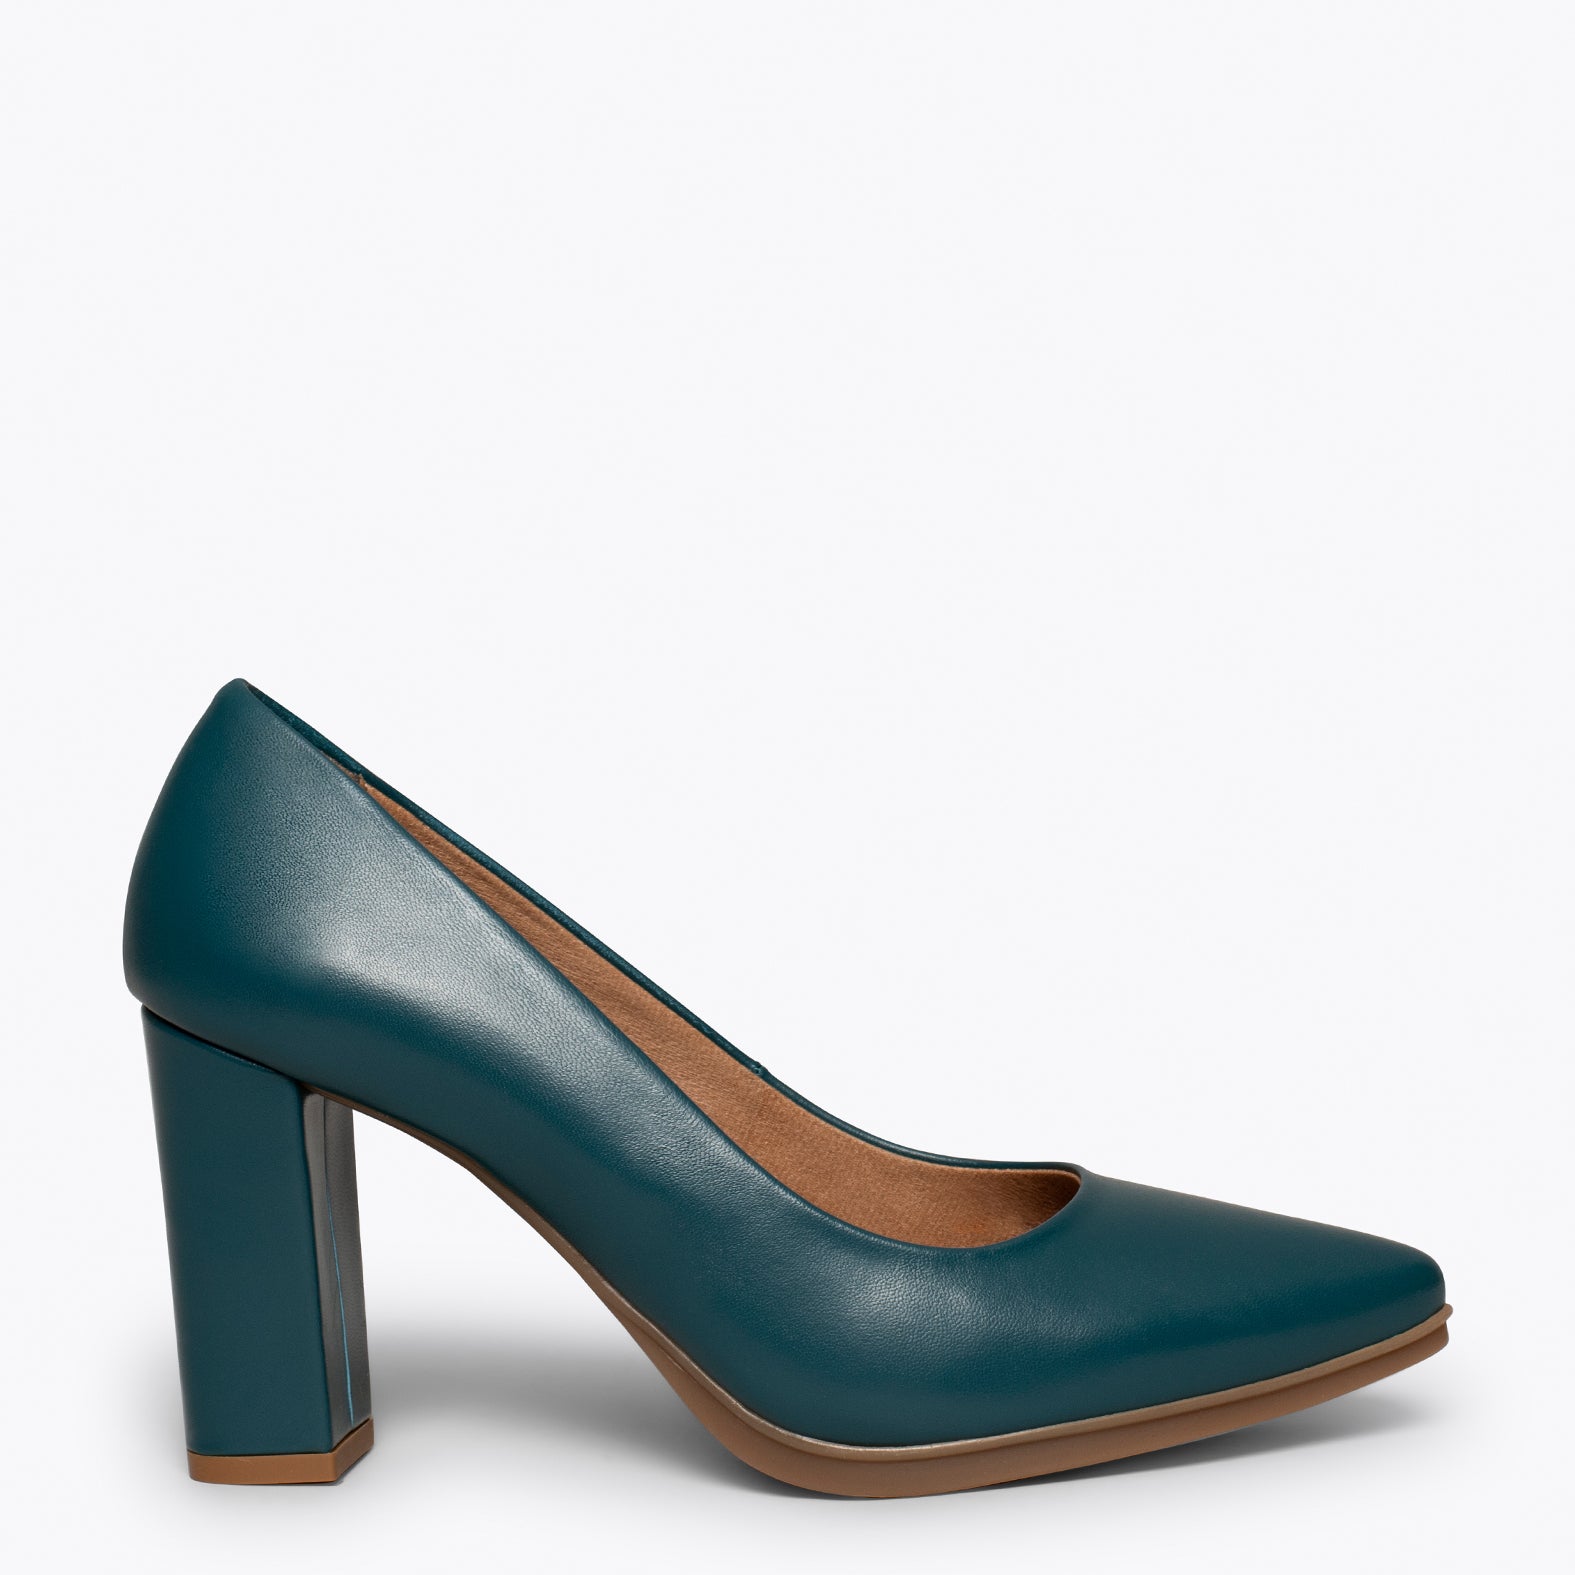 URBAN SALON – TEAL nappa leather high heel